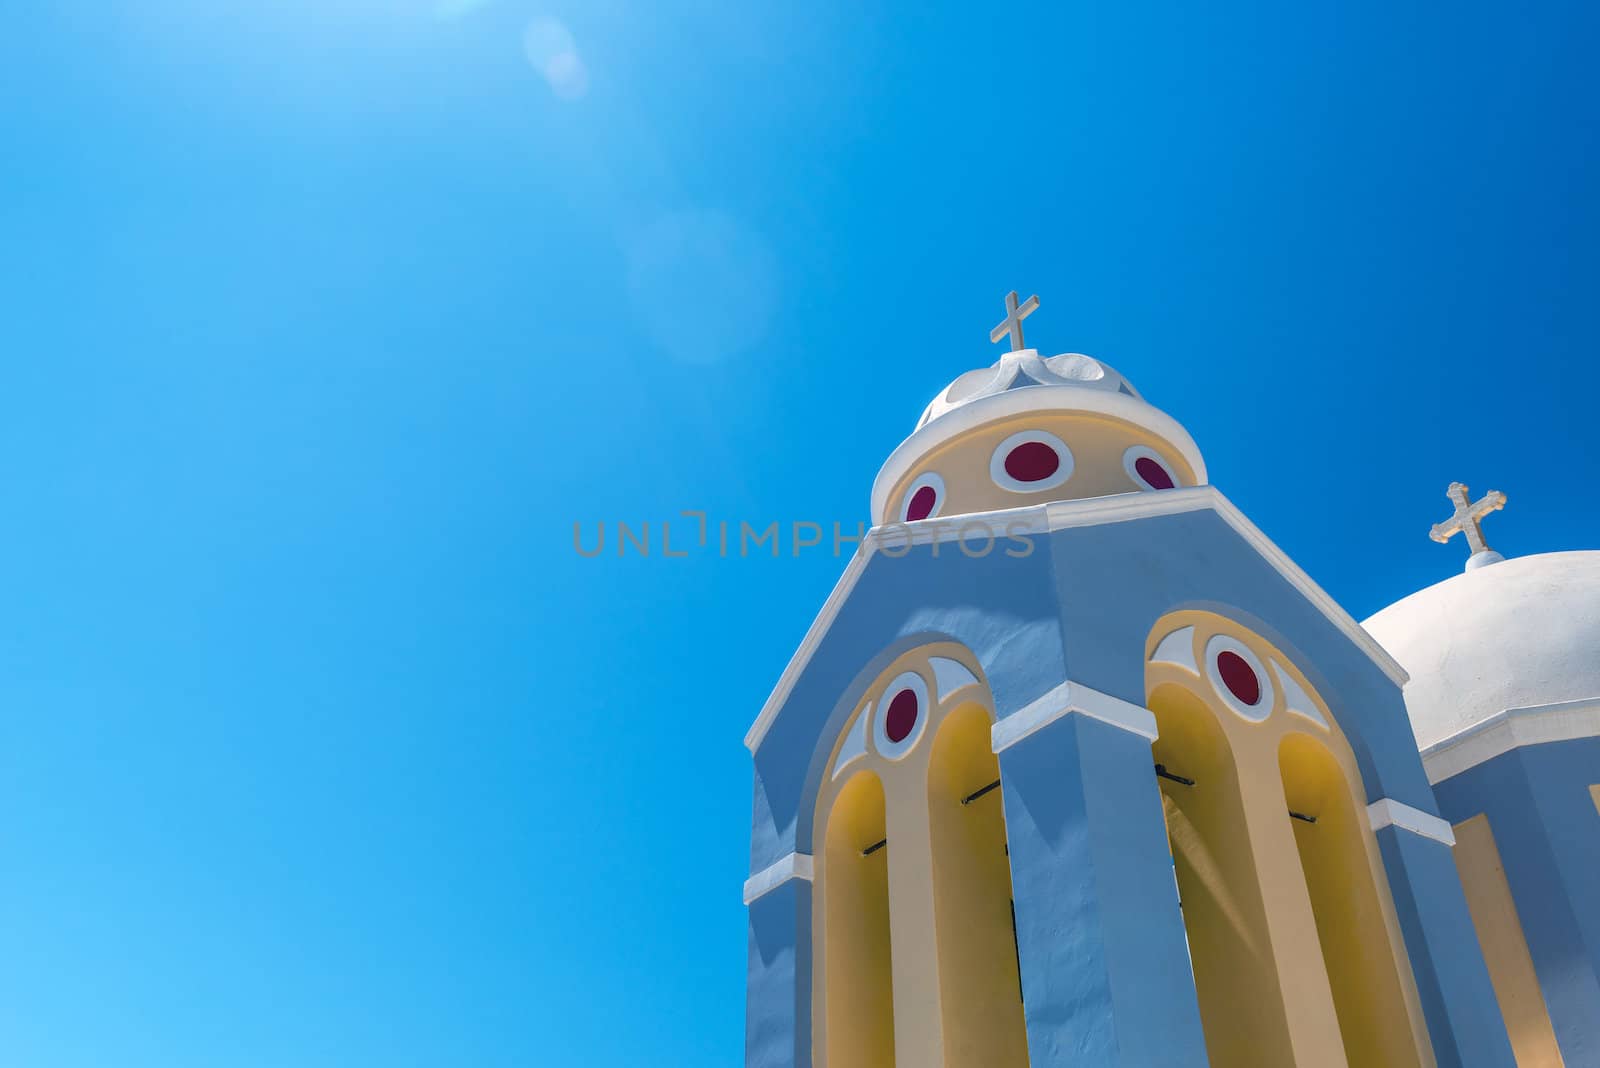 Typical Greek Catholic Church in Fira, Island Santorini, Greece